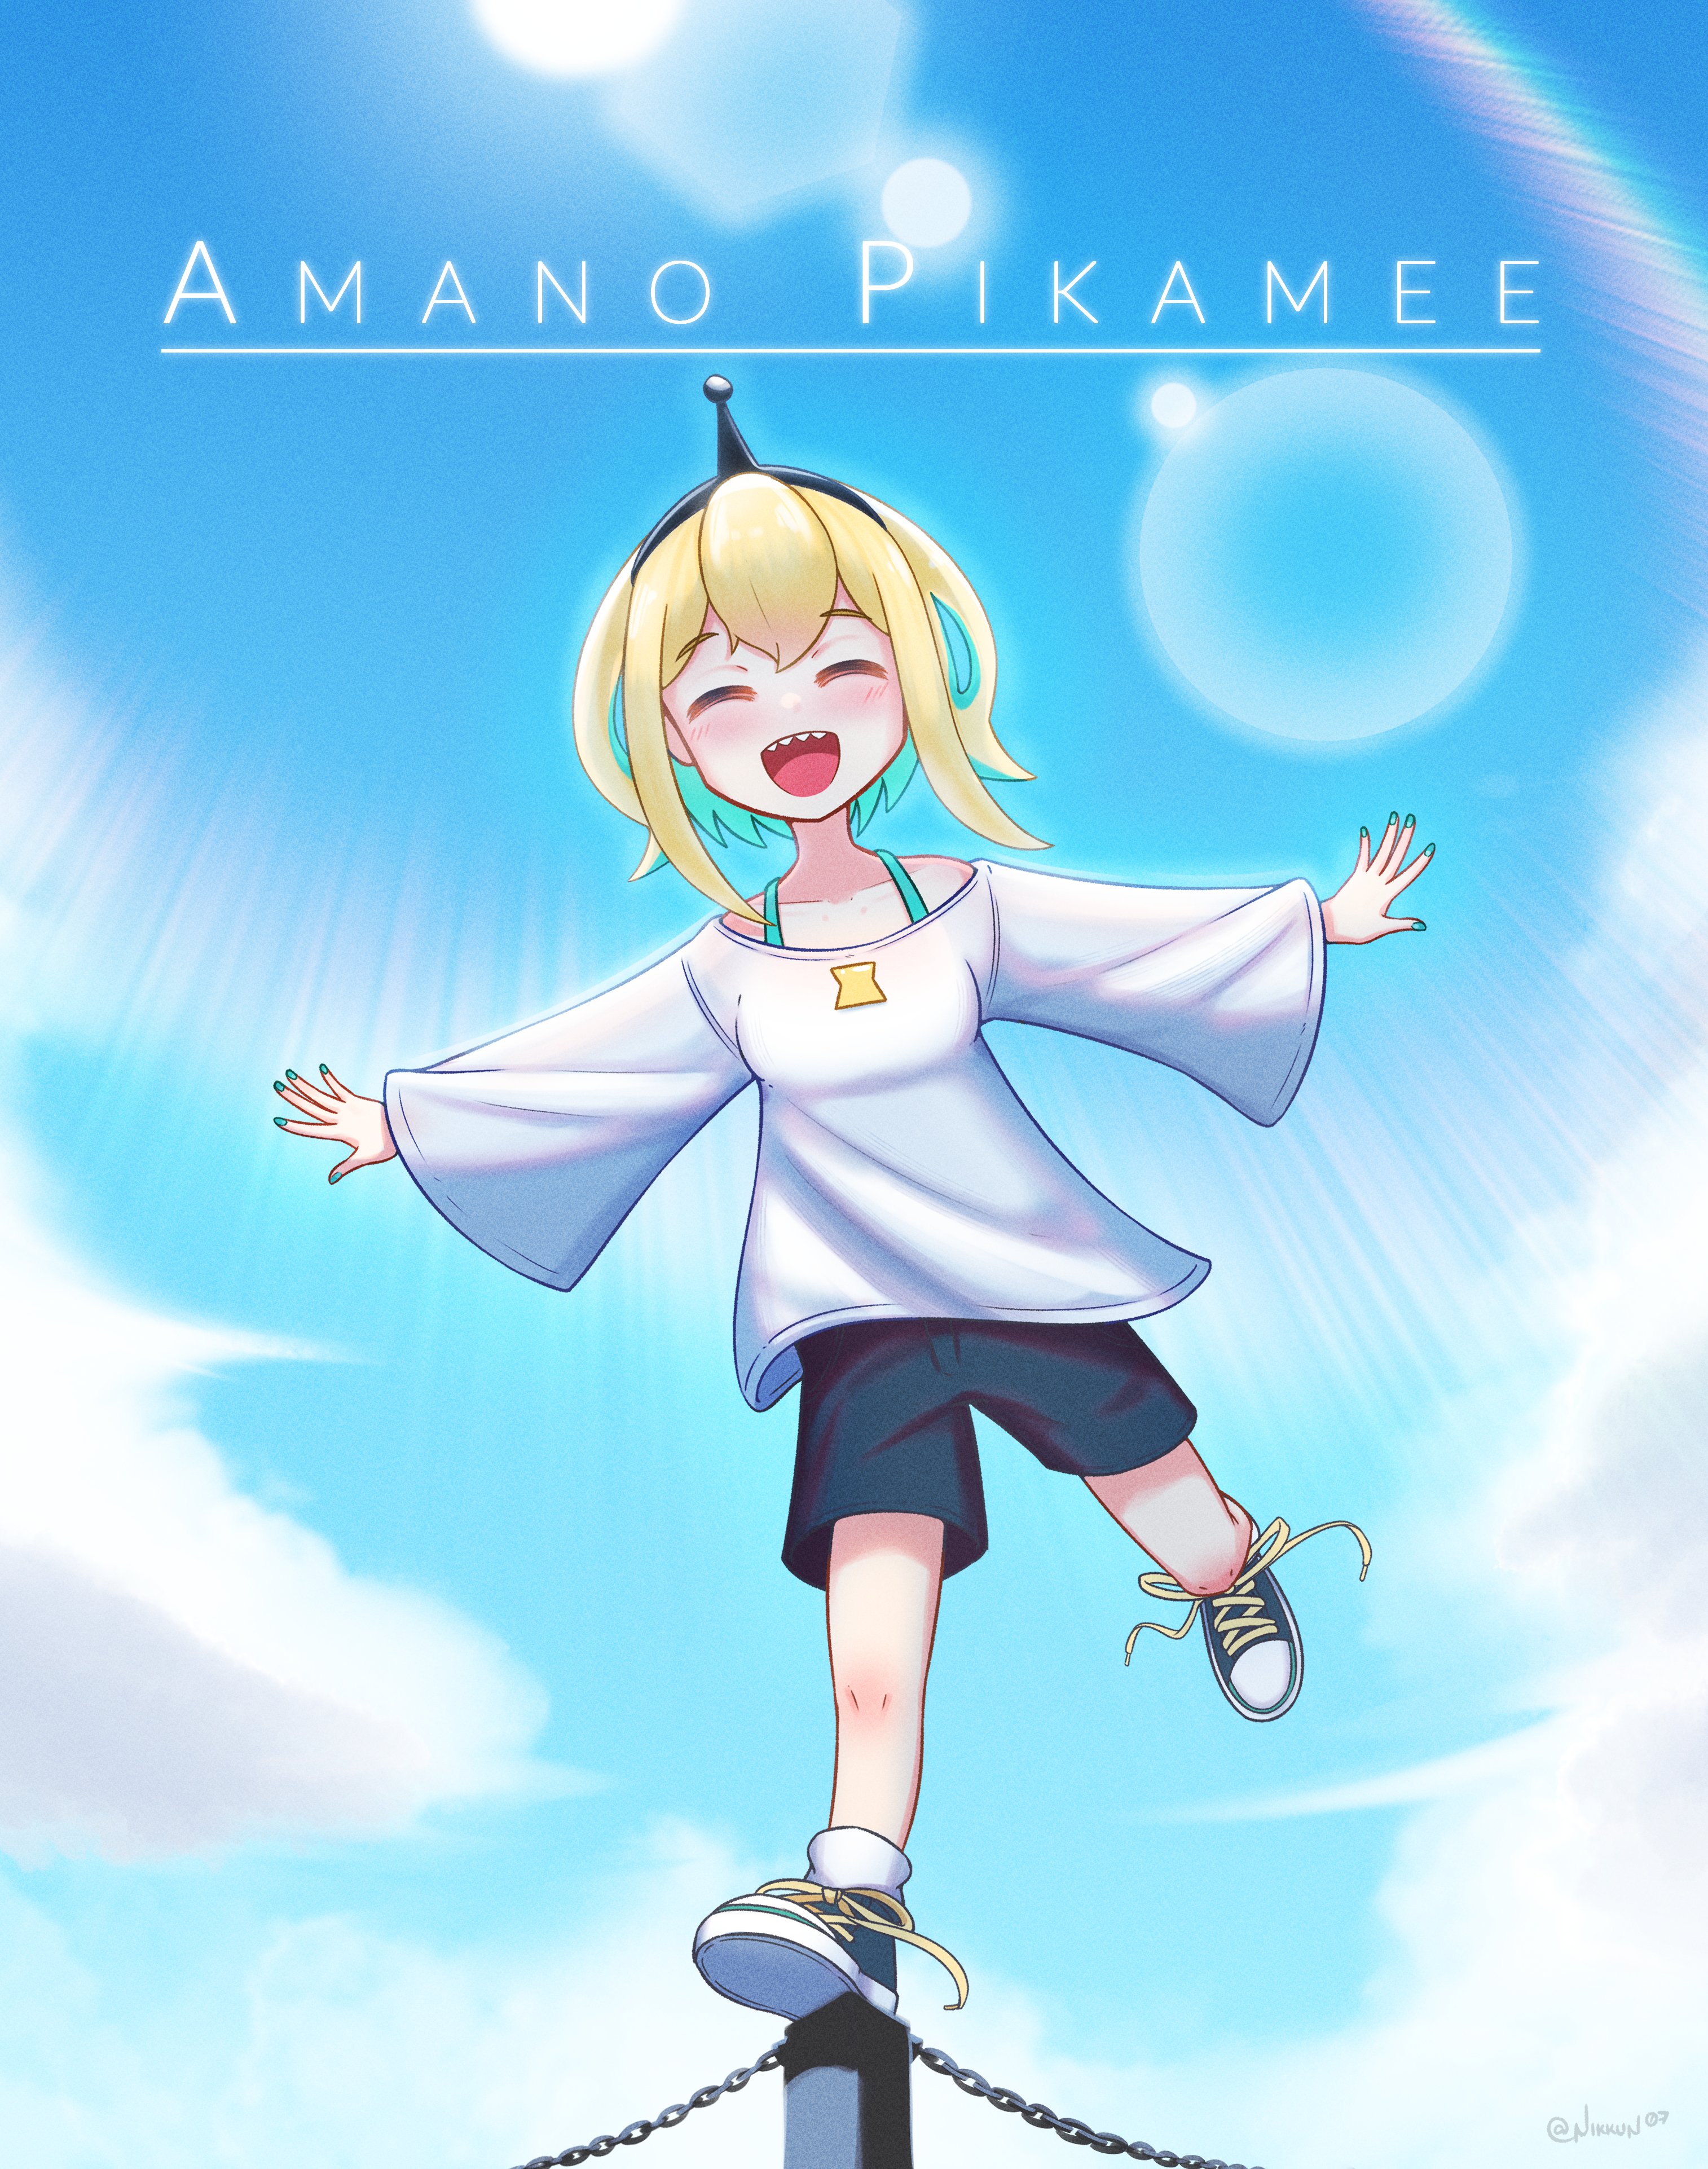 amano pikamee (voms) drawn by nikkun